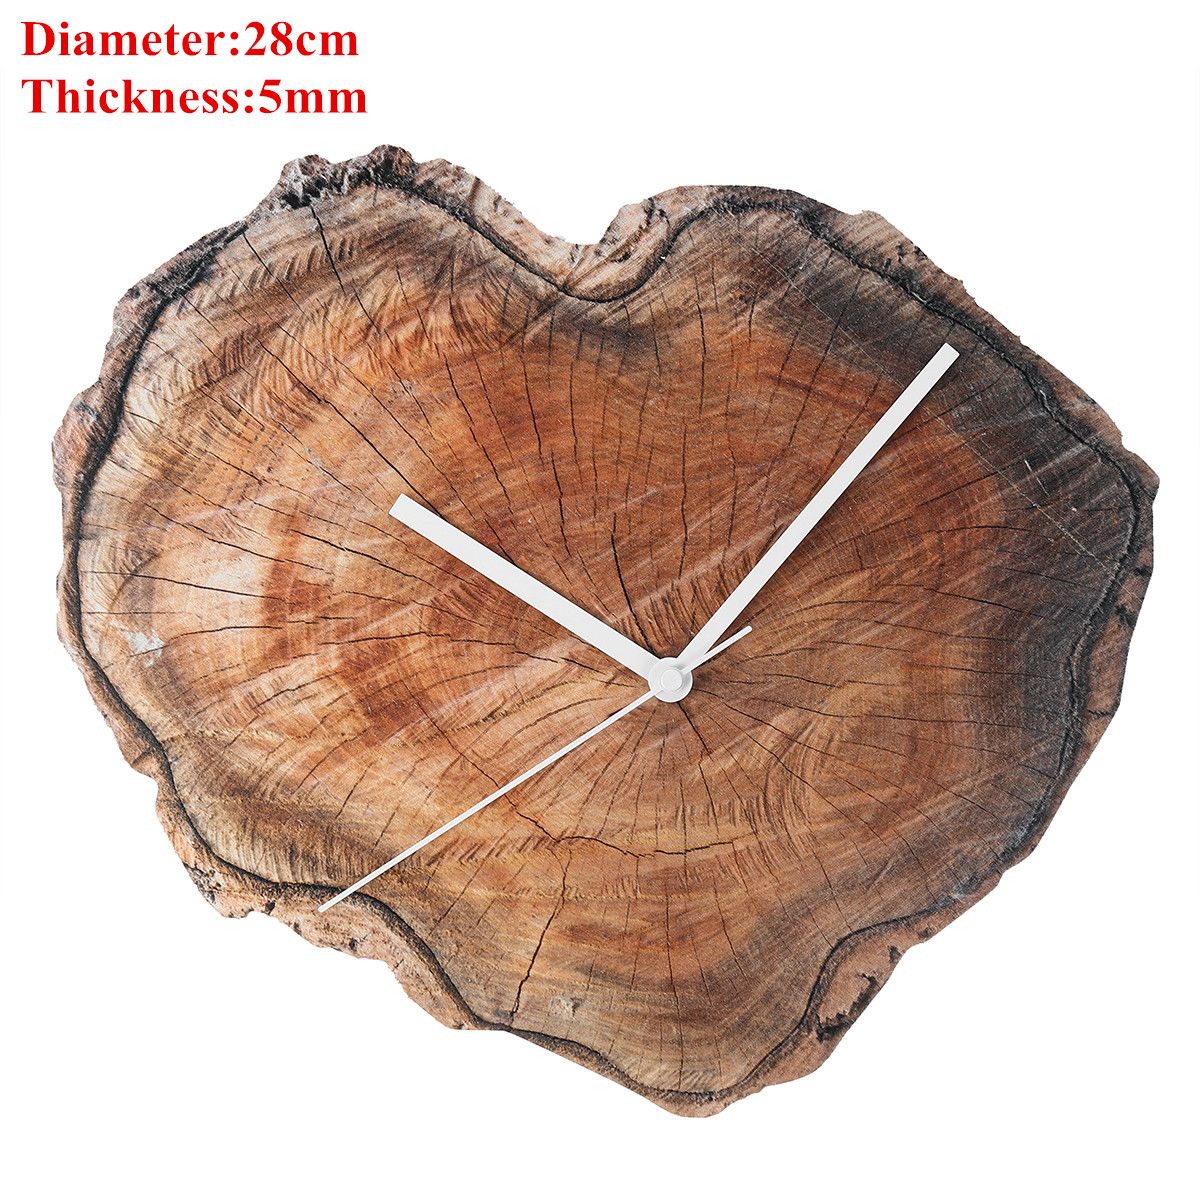 11-Retro-Wood-Wall-Clock-DIY-Living-Room-Home-Bar-Office-Decoration-28cm-Watch-1563726